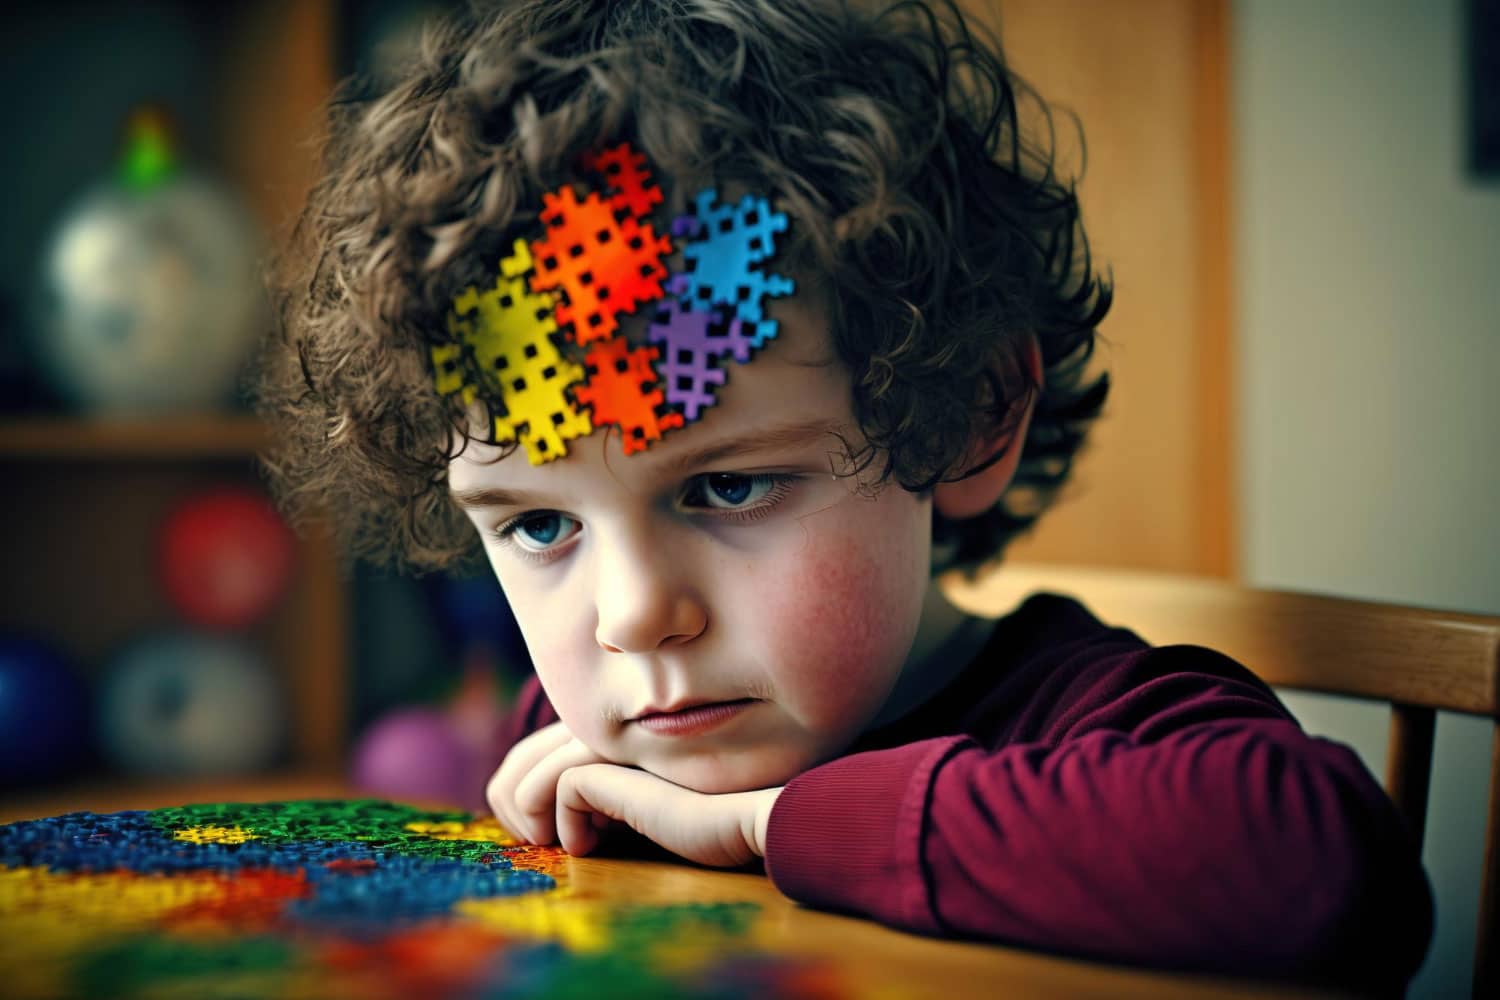 Autism autistic child learning disability special needs neurodiversity childhood development